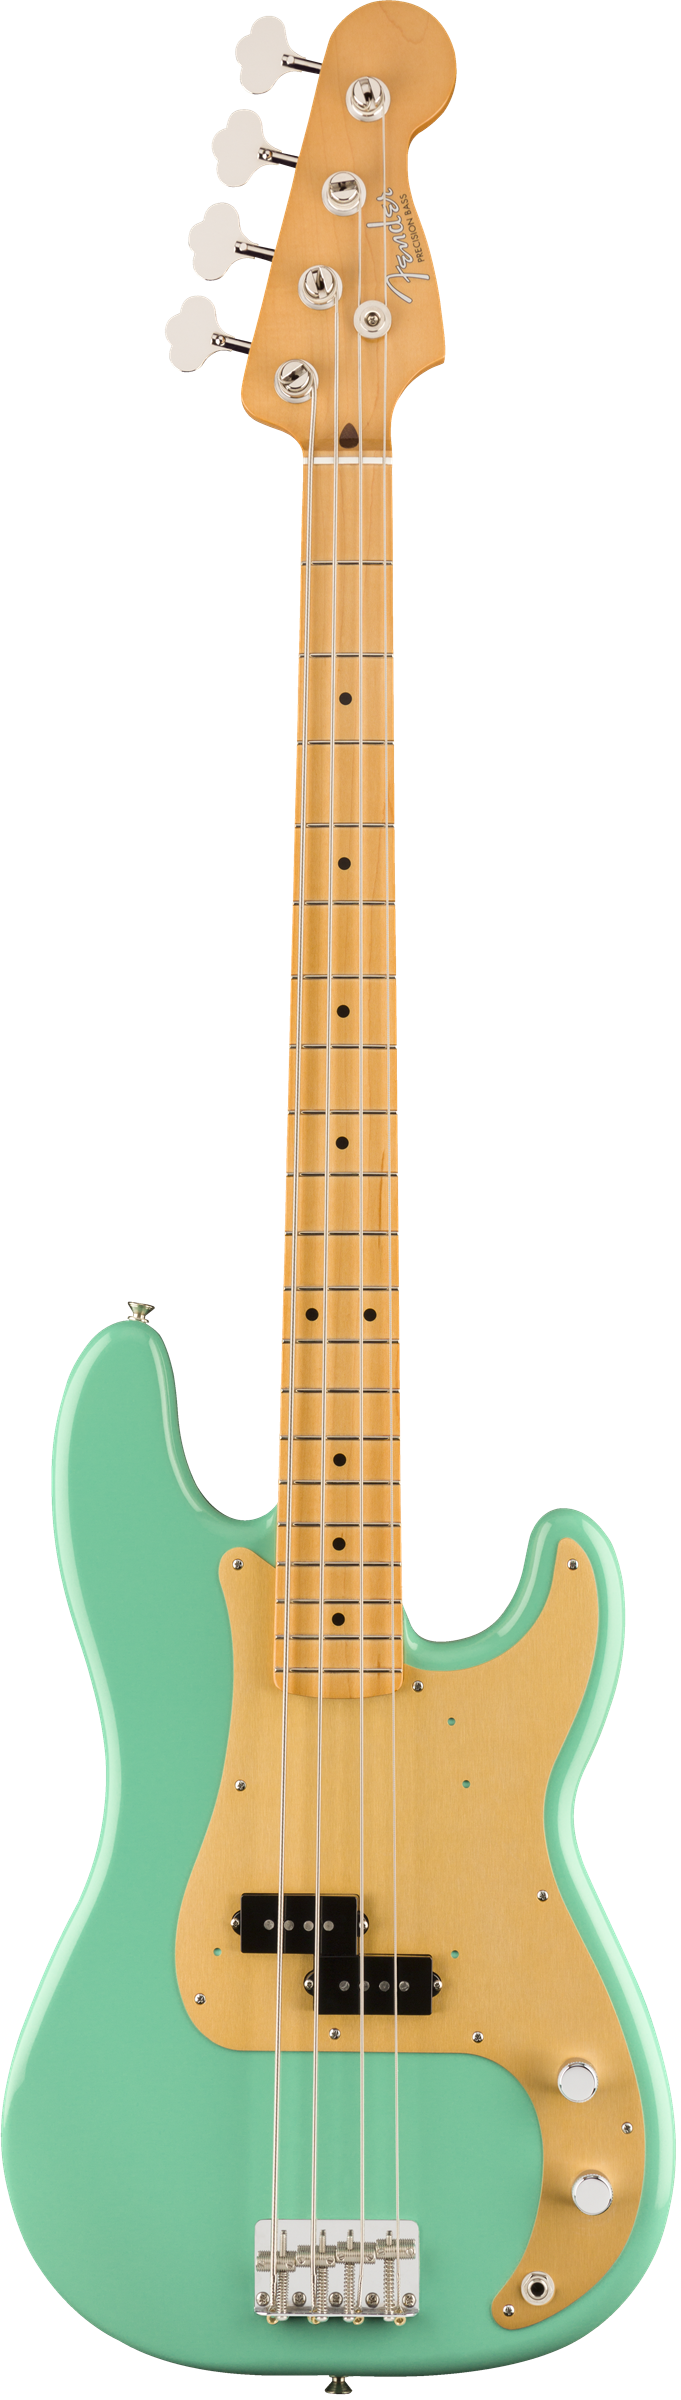 Fender Vintera 50s Precision Bass, Maple Fingerboard, Sea Foam Green